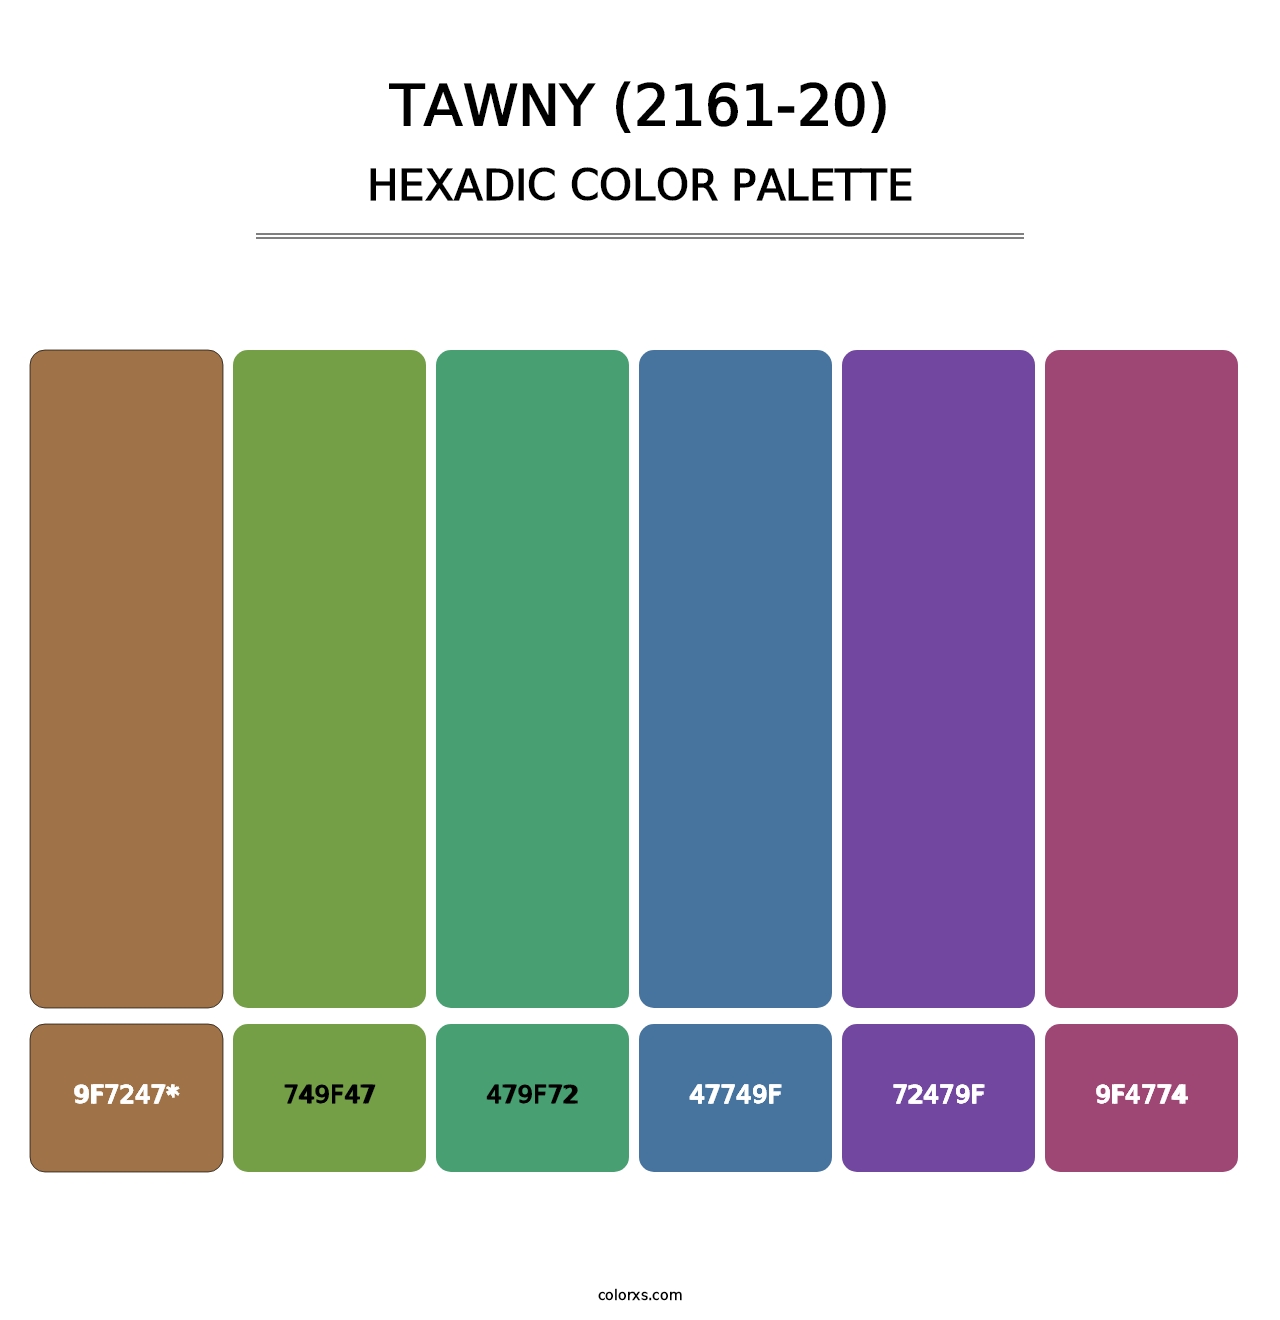 Tawny (2161-20) - Hexadic Color Palette